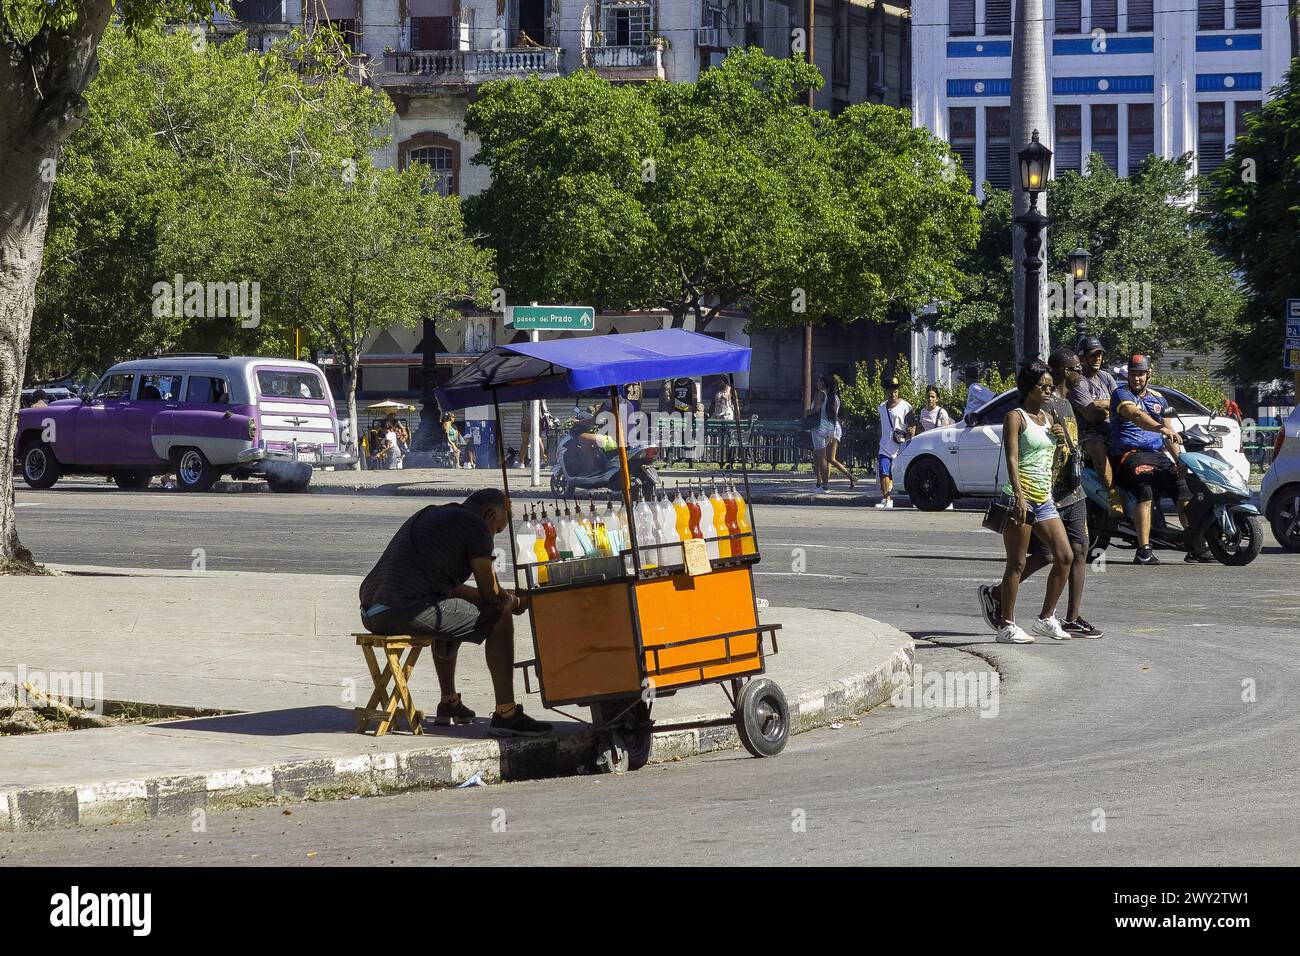 Cuban man selling flavored ice in a cart on a city street, Havana, Cuba Stock Photo